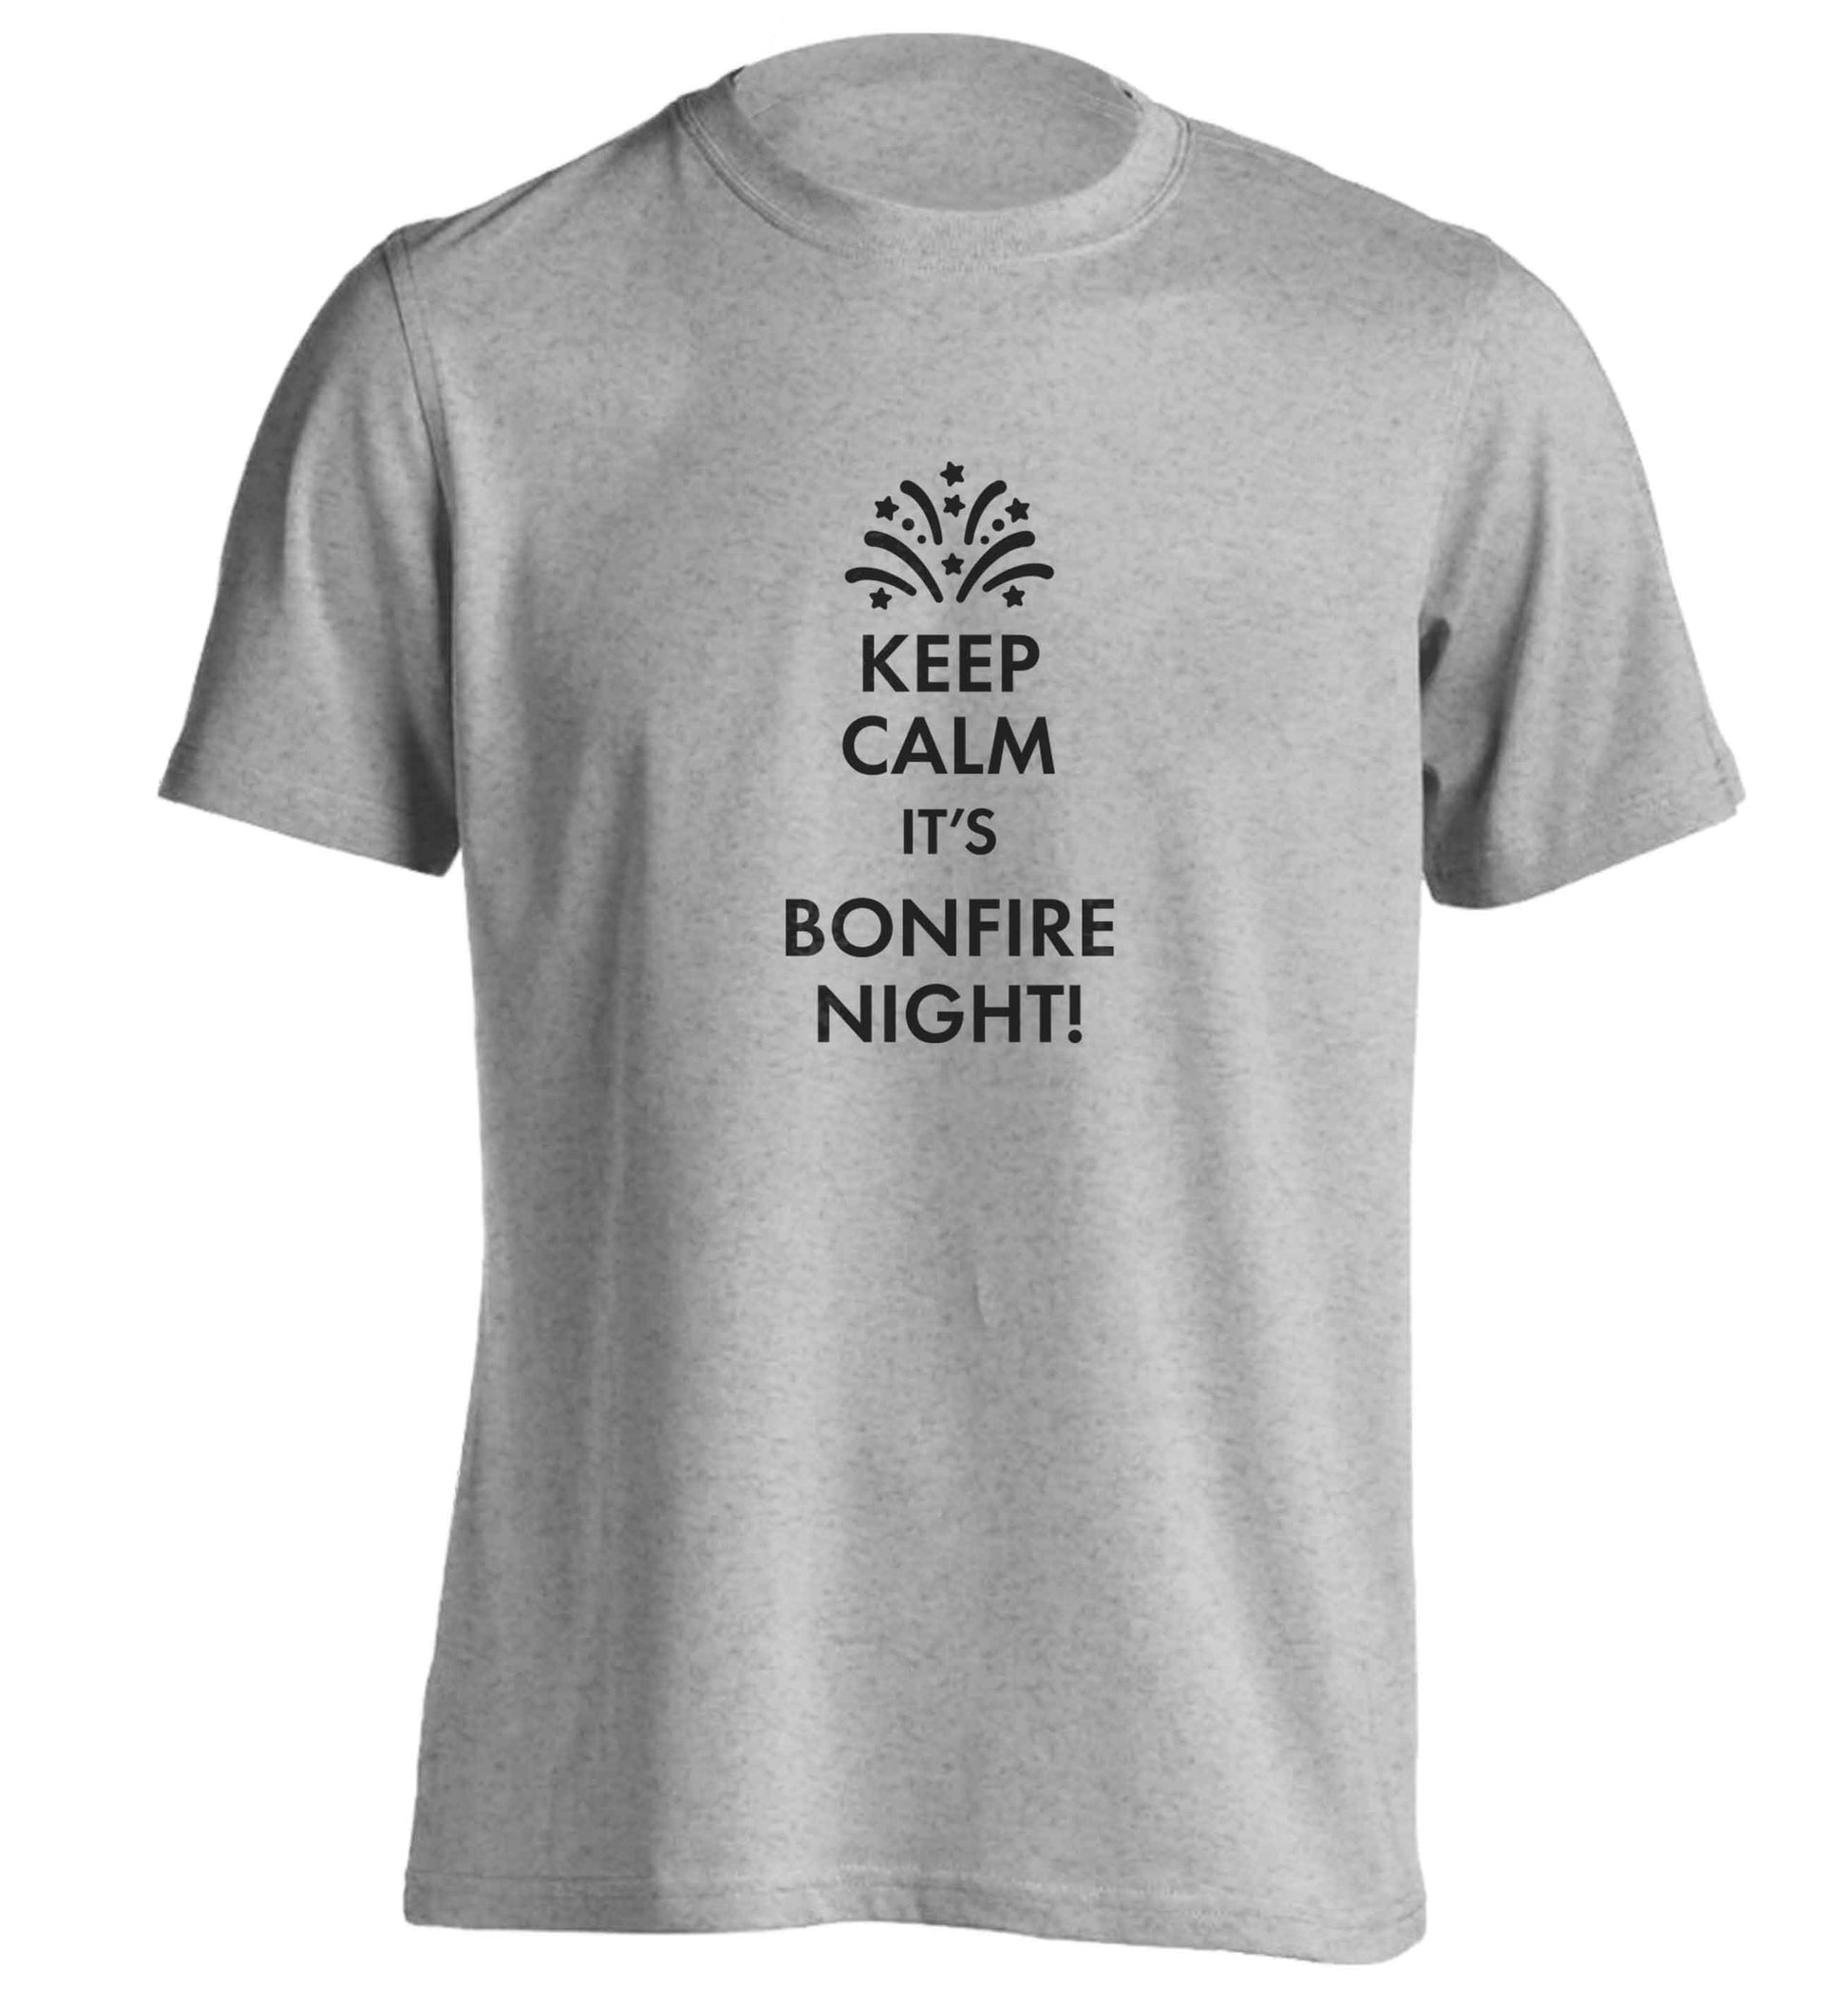 Keep calm its bonfire night adults unisex grey Tshirt 2XL